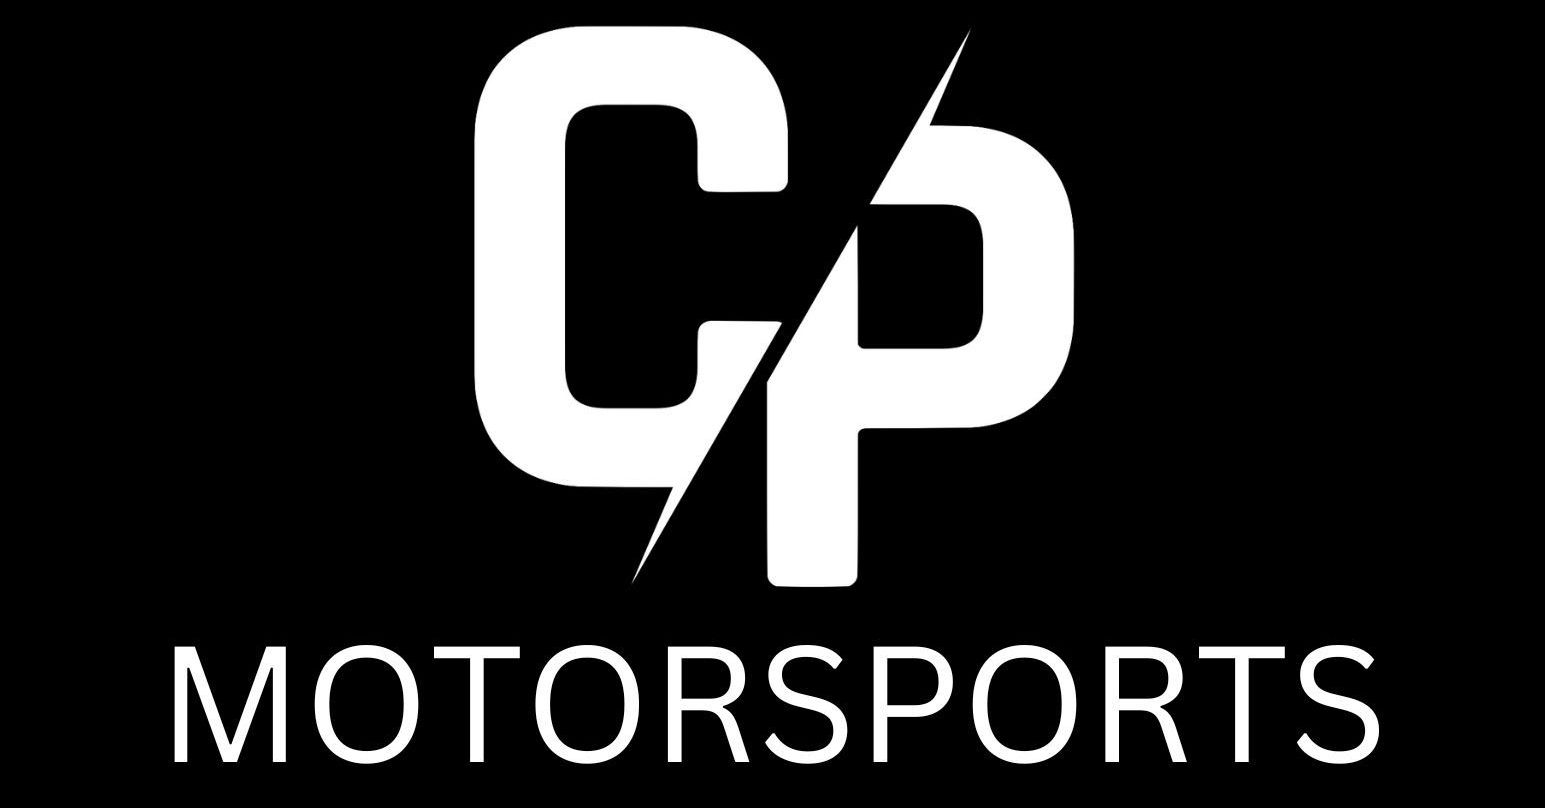 Cleanpro Motorsports logo